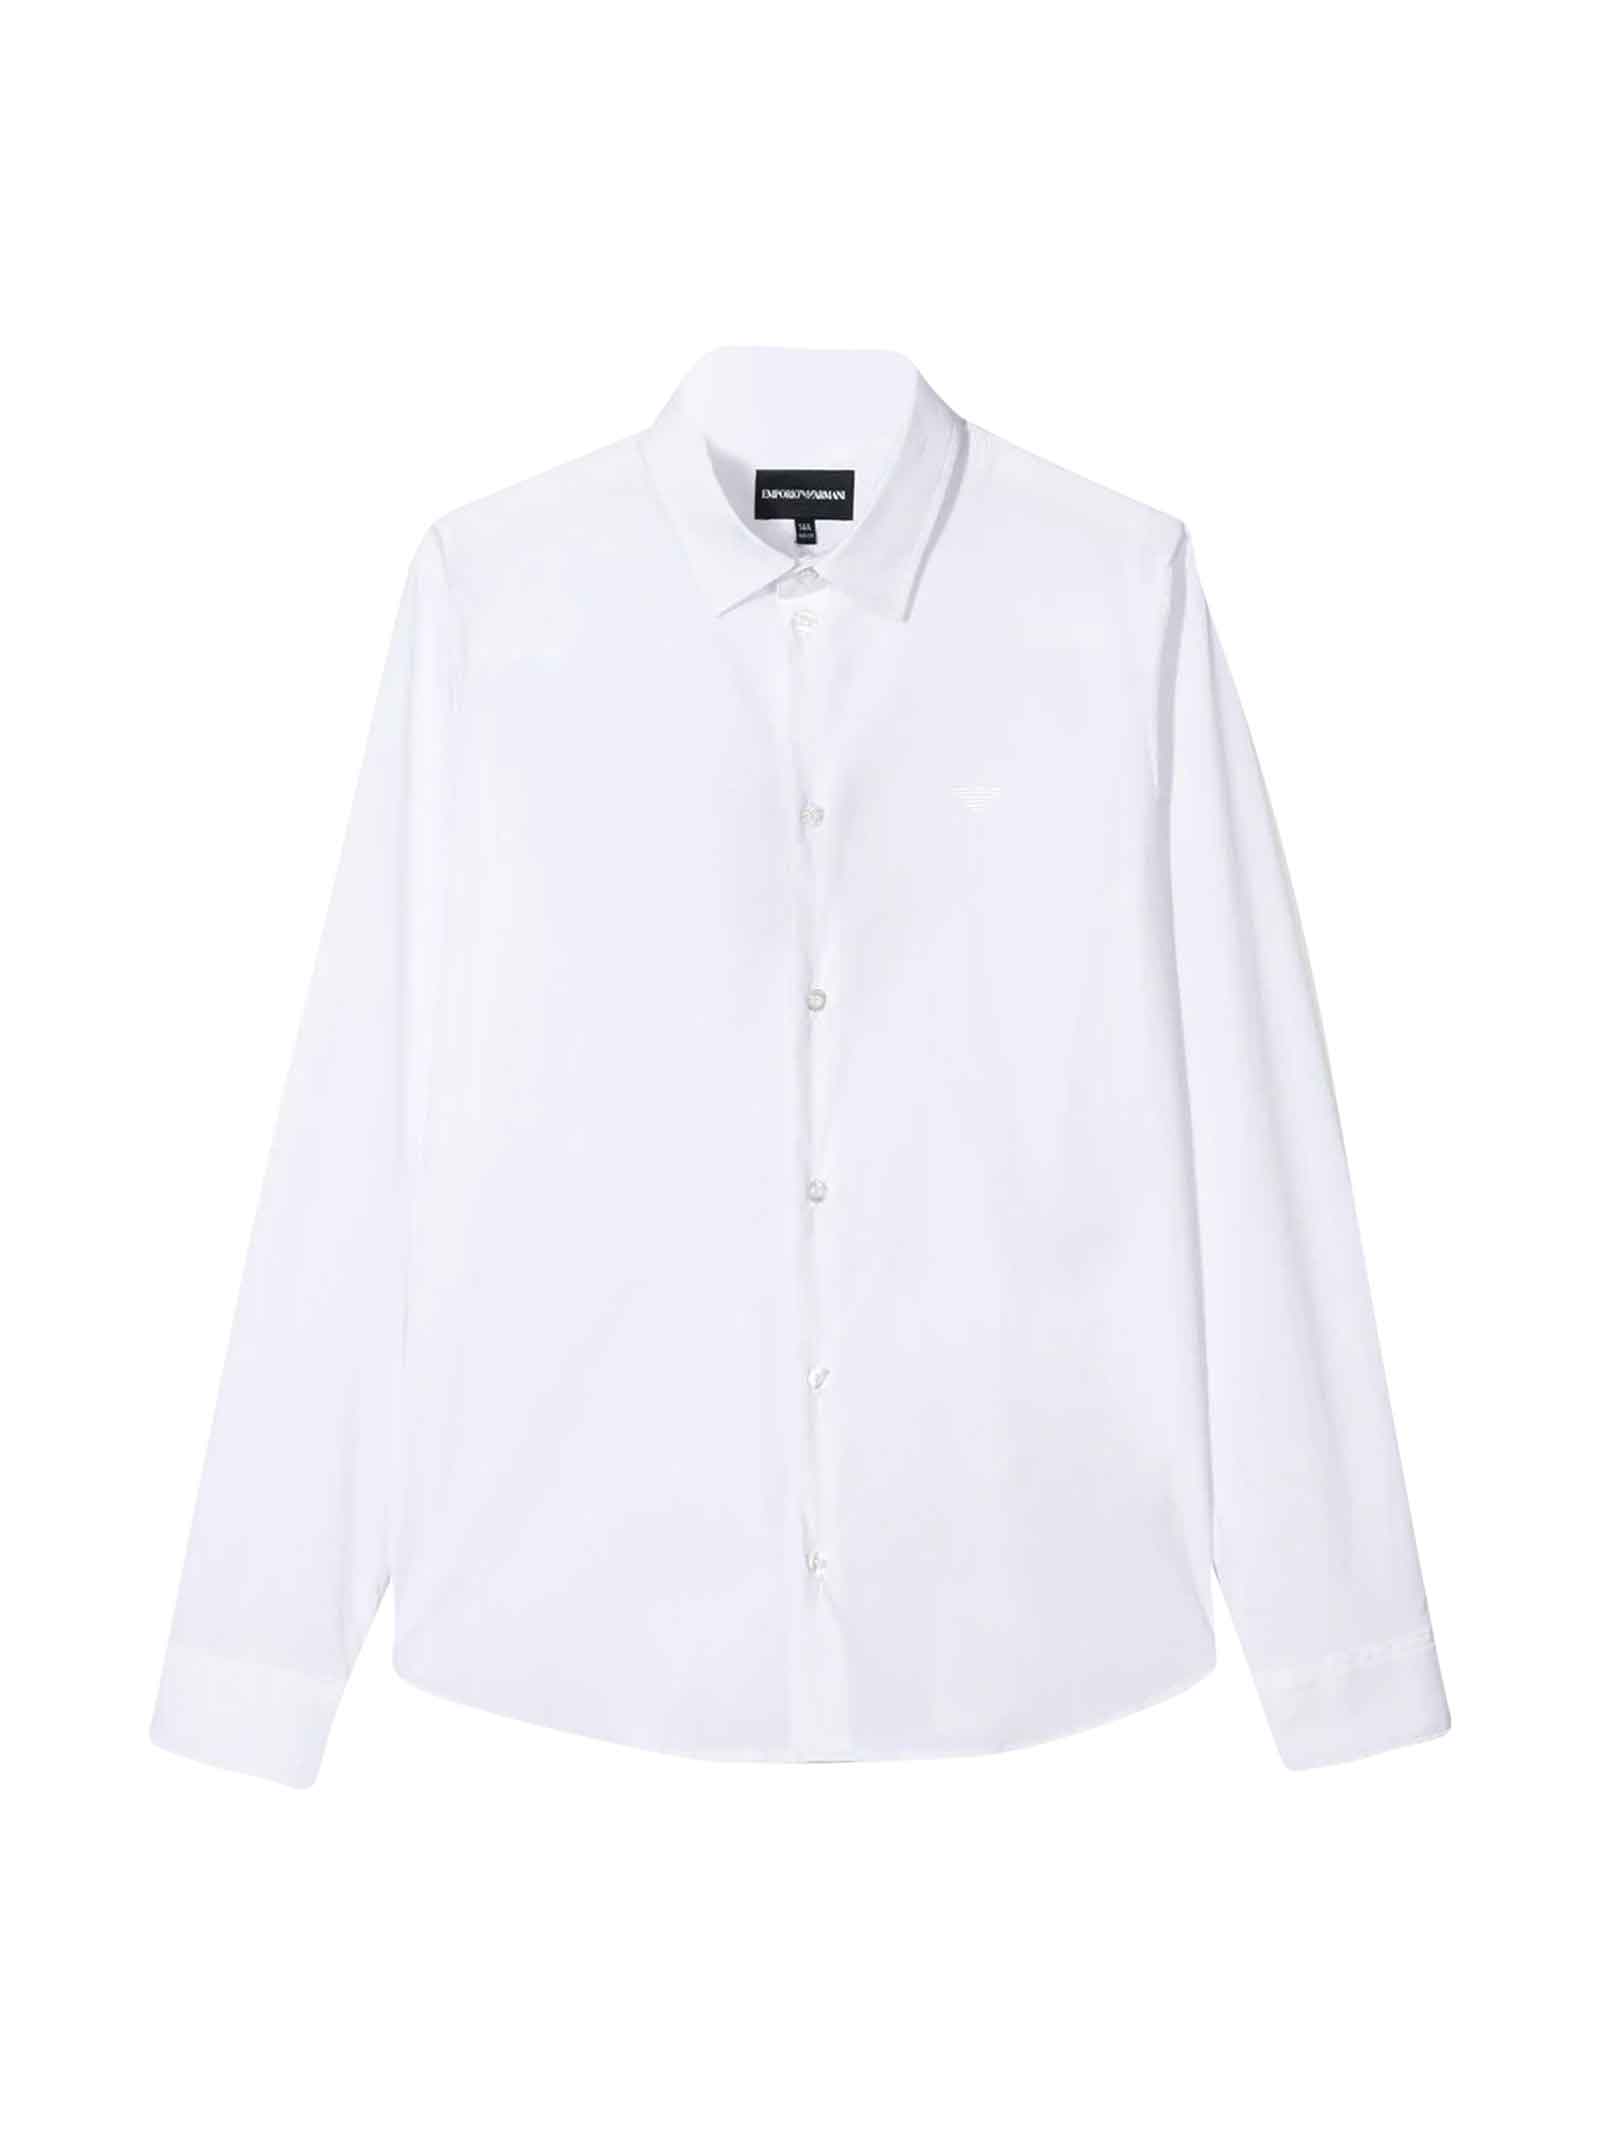 Emporio Armani White Teen Shirt